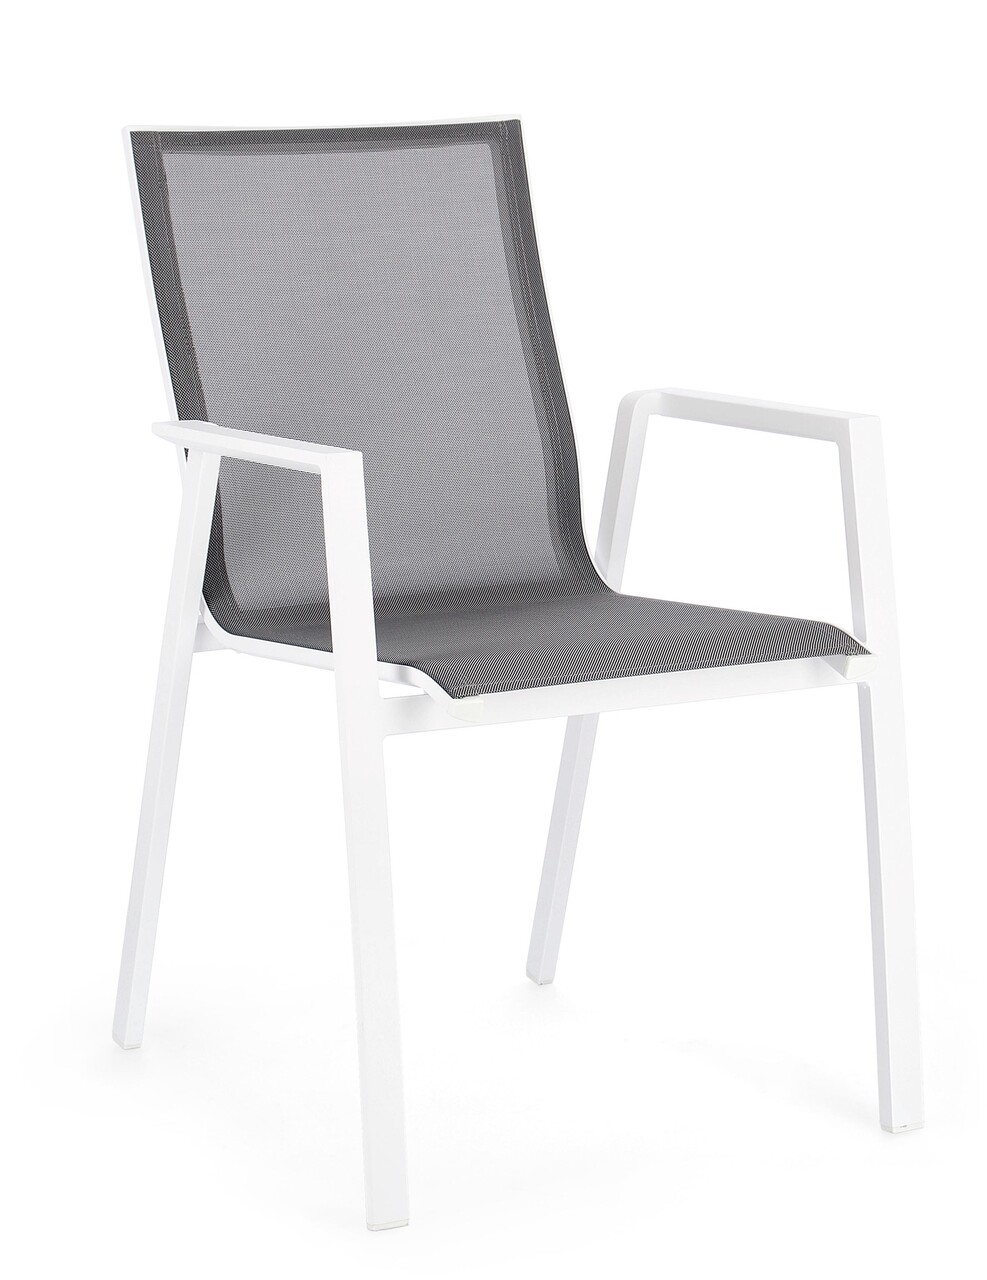 Krion kerti szék, bizzotto, 56 x 61.5 x 88 cm, alumínium/textilén 1x1, fehér